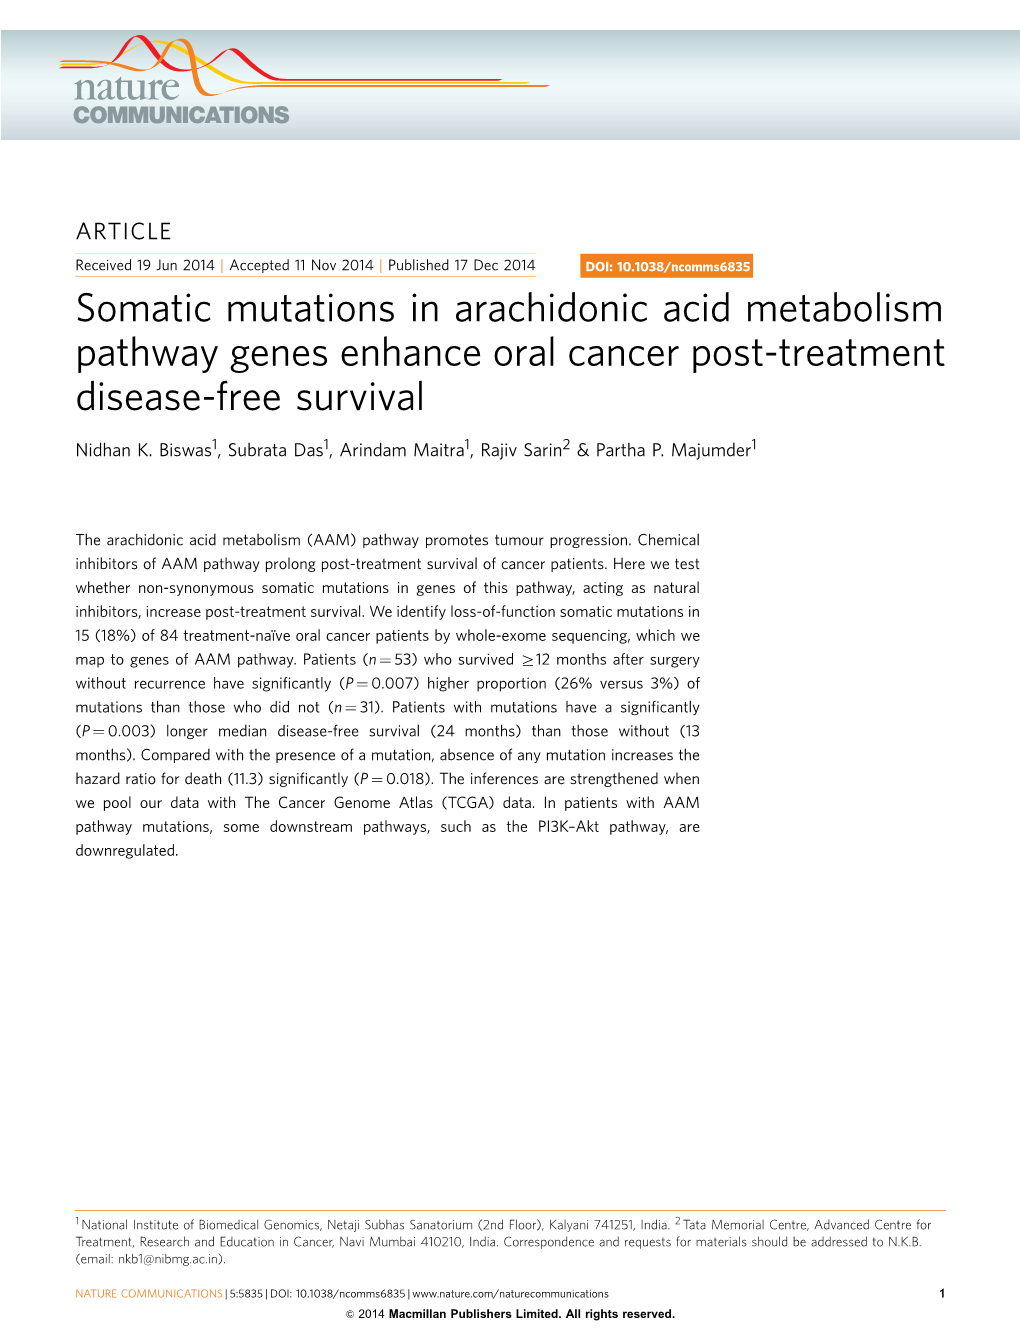 Somatic Mutations in Arachidonic Acid Metabolism Pathway Genes Enhance Oral Cancer Post-Treatment Disease-Free Survival